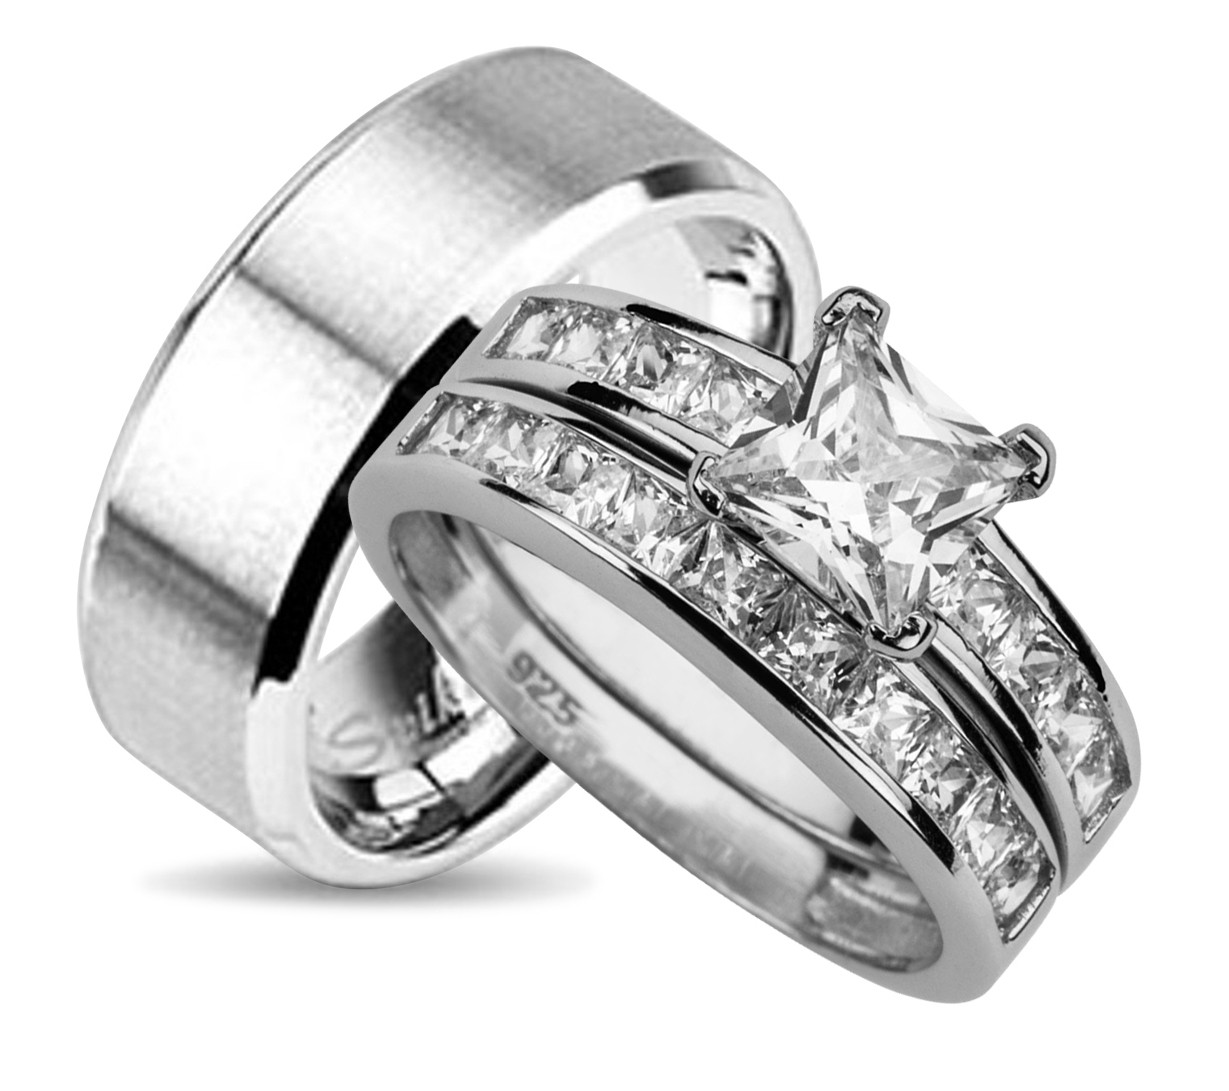 Wedding Rings Sets At Walmart
 LaRaso & Co His and Hers Wedding Ring Set Matching